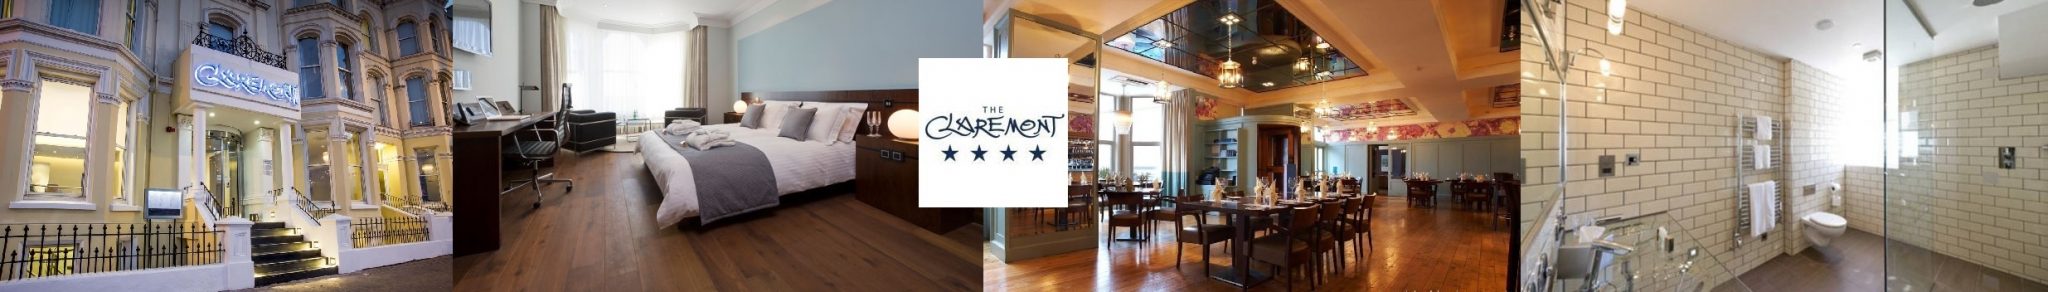 Claremont Hotel - Isle of Man TT